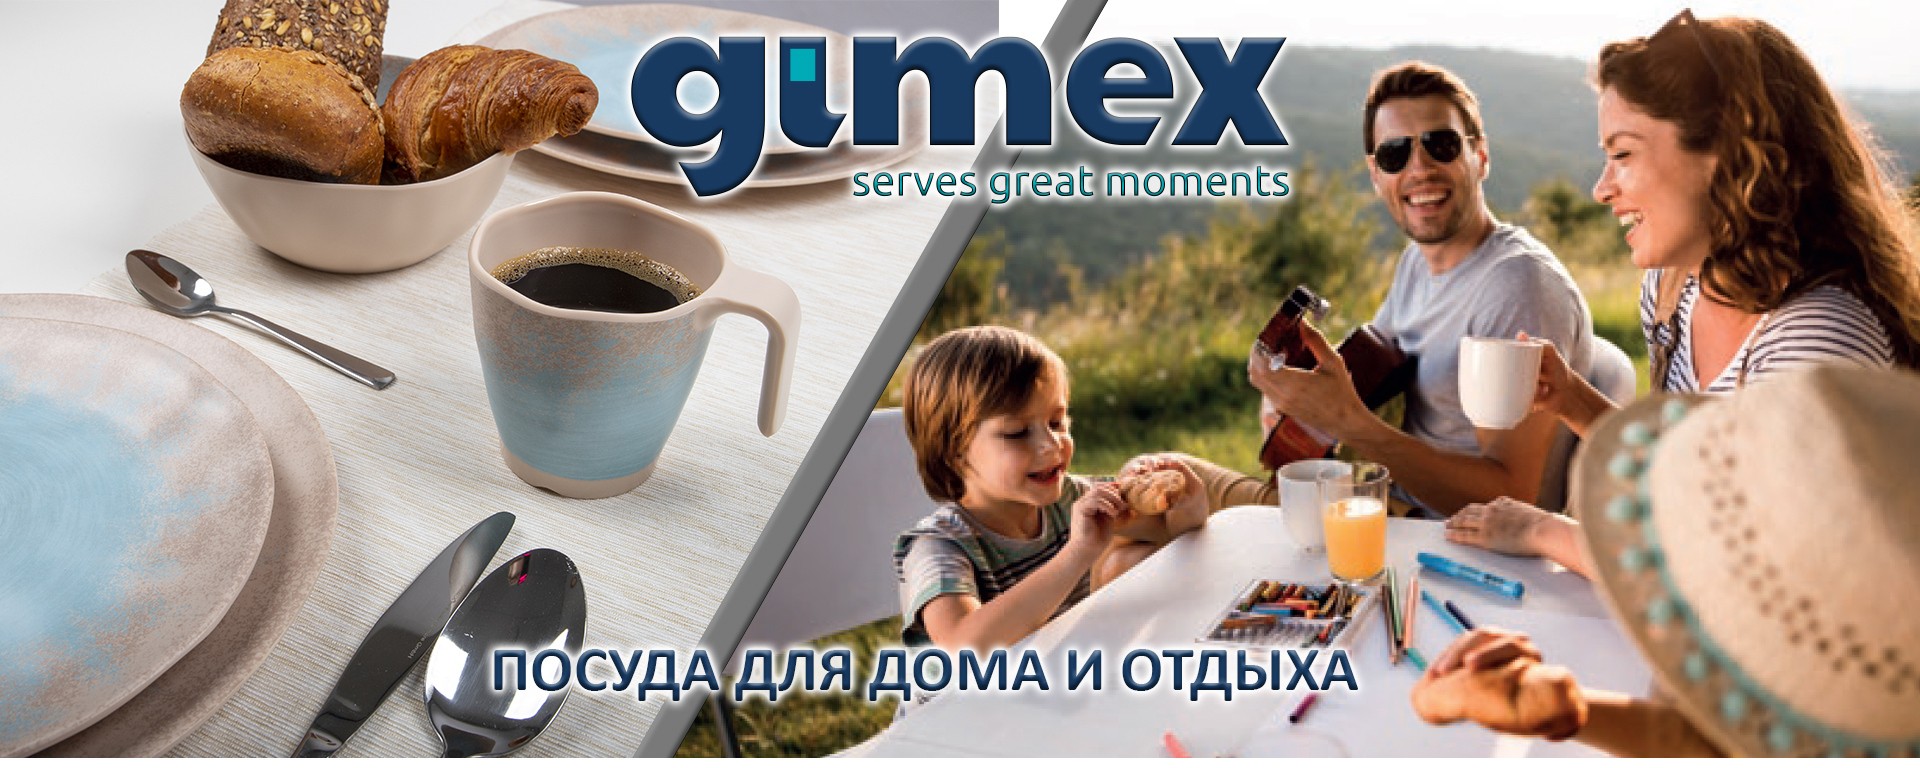 Gimex - Melamine and more